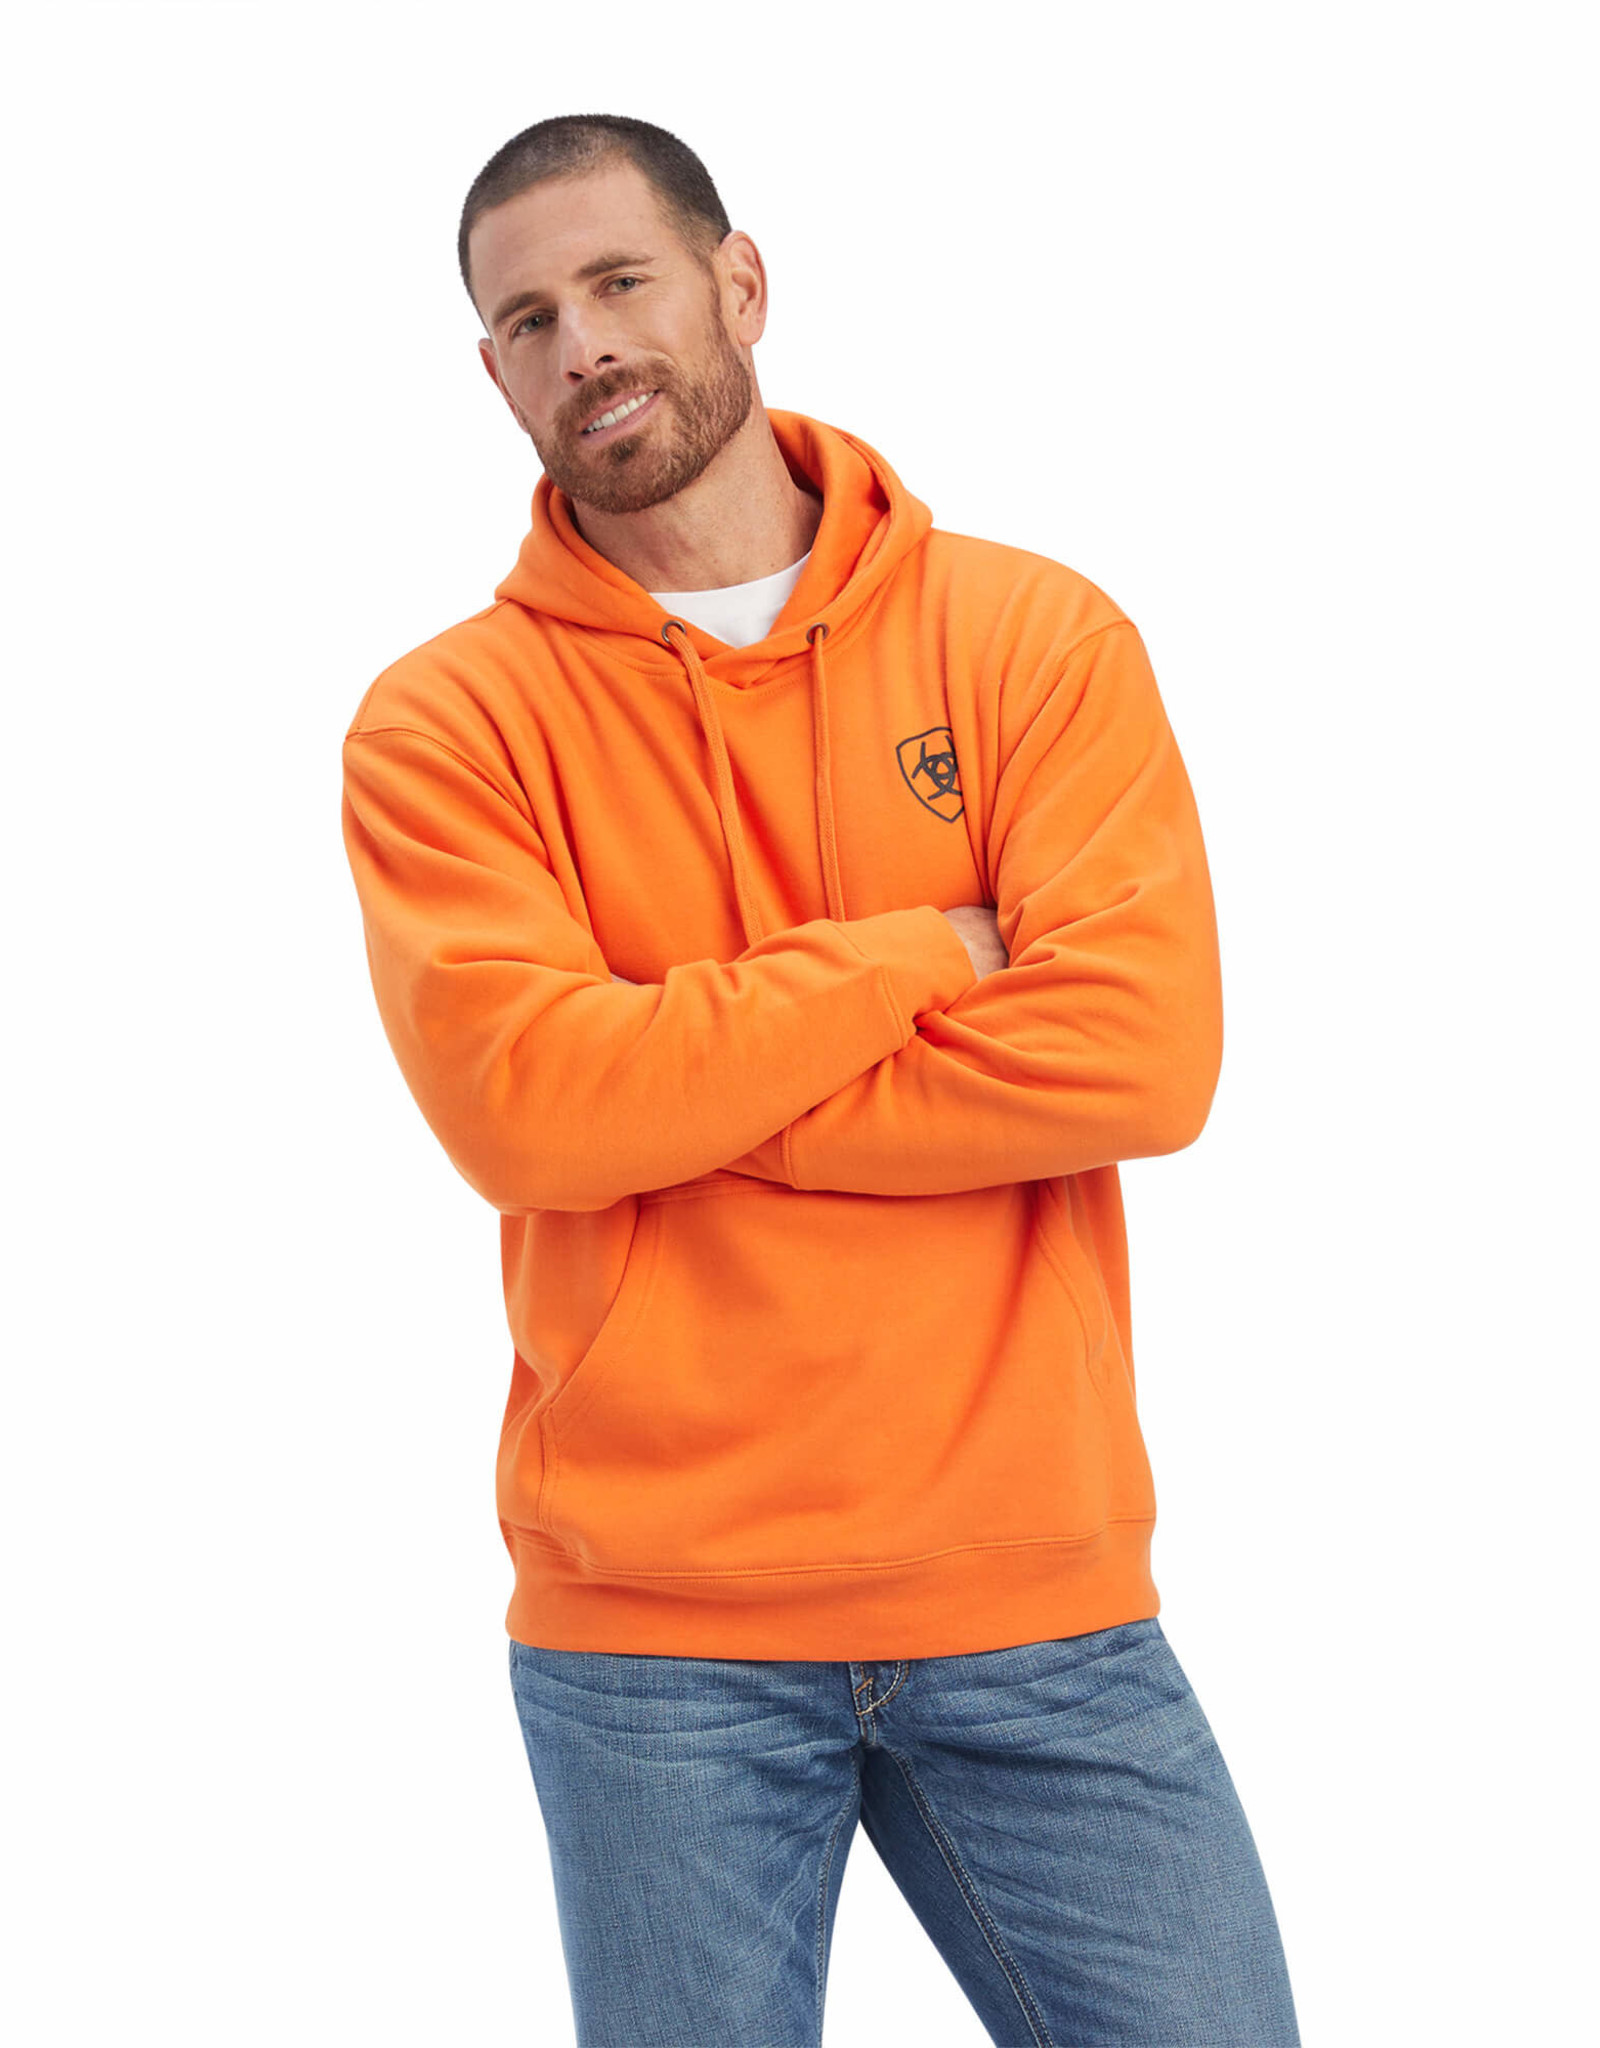 Ariat Mens Ariat Harvest Pumpkin Free Bird Logo Hooded Pullover Sweatshirt